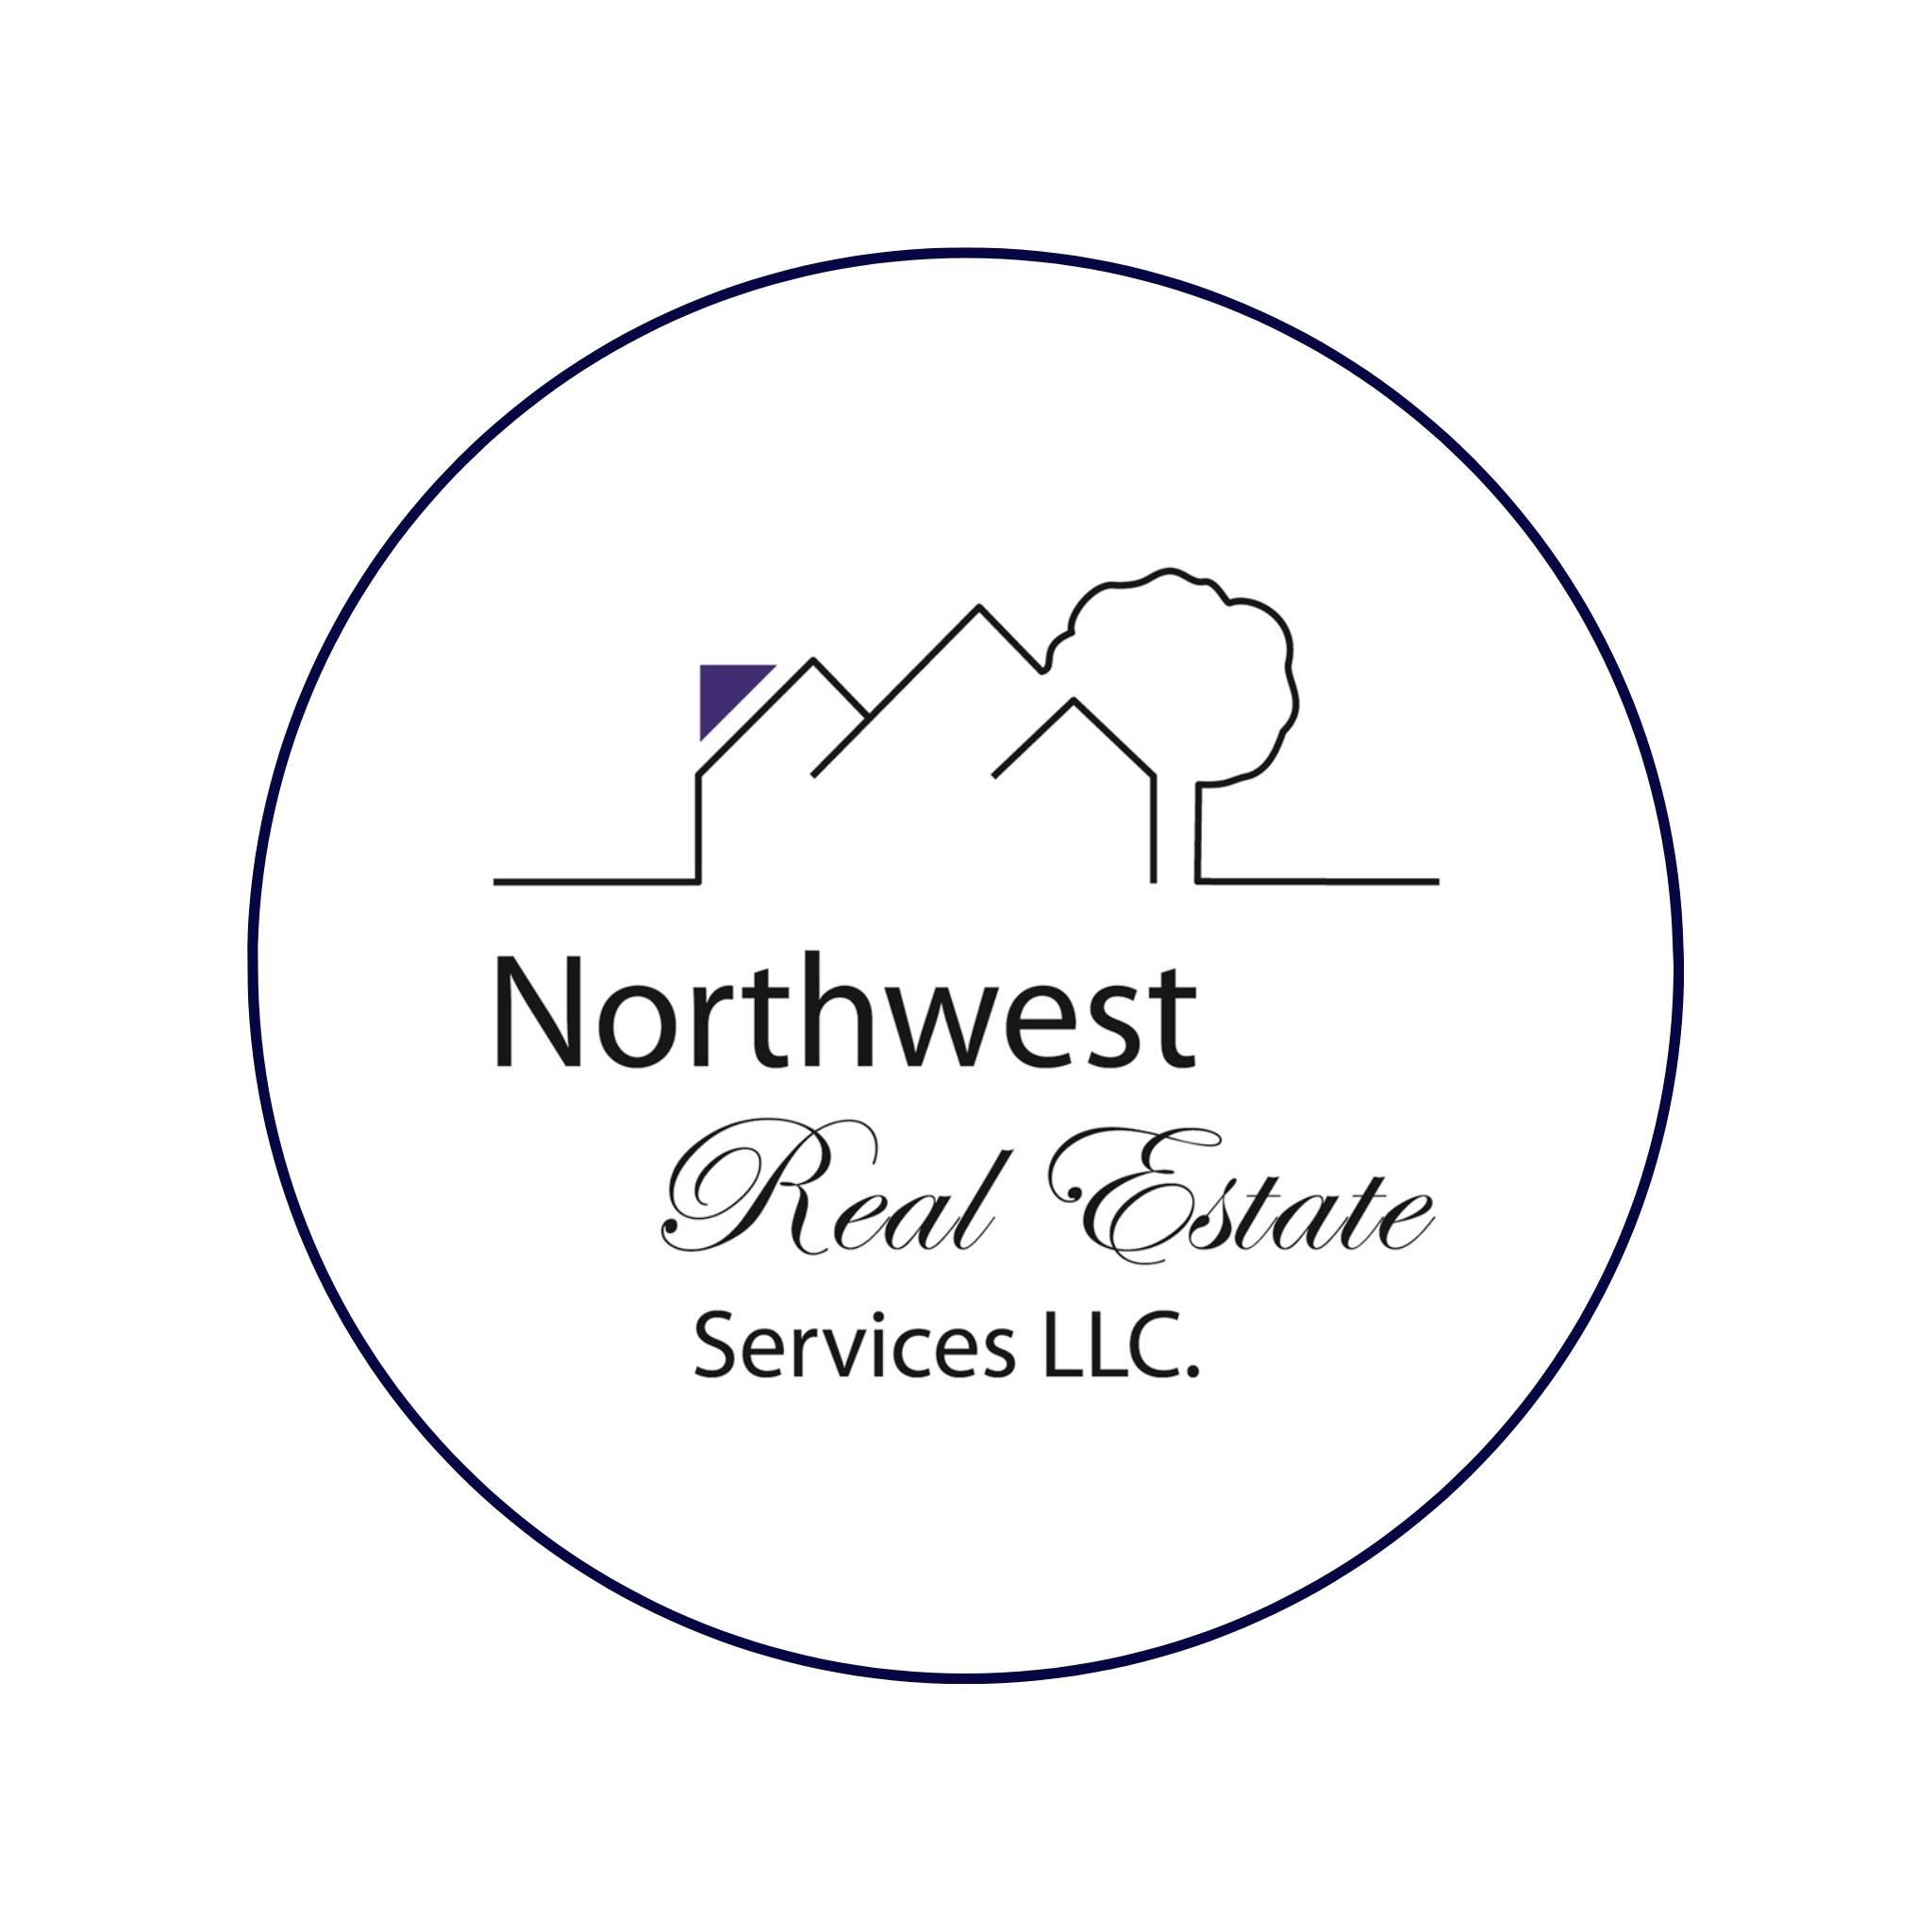 Northwest Real Estate Services, LLC